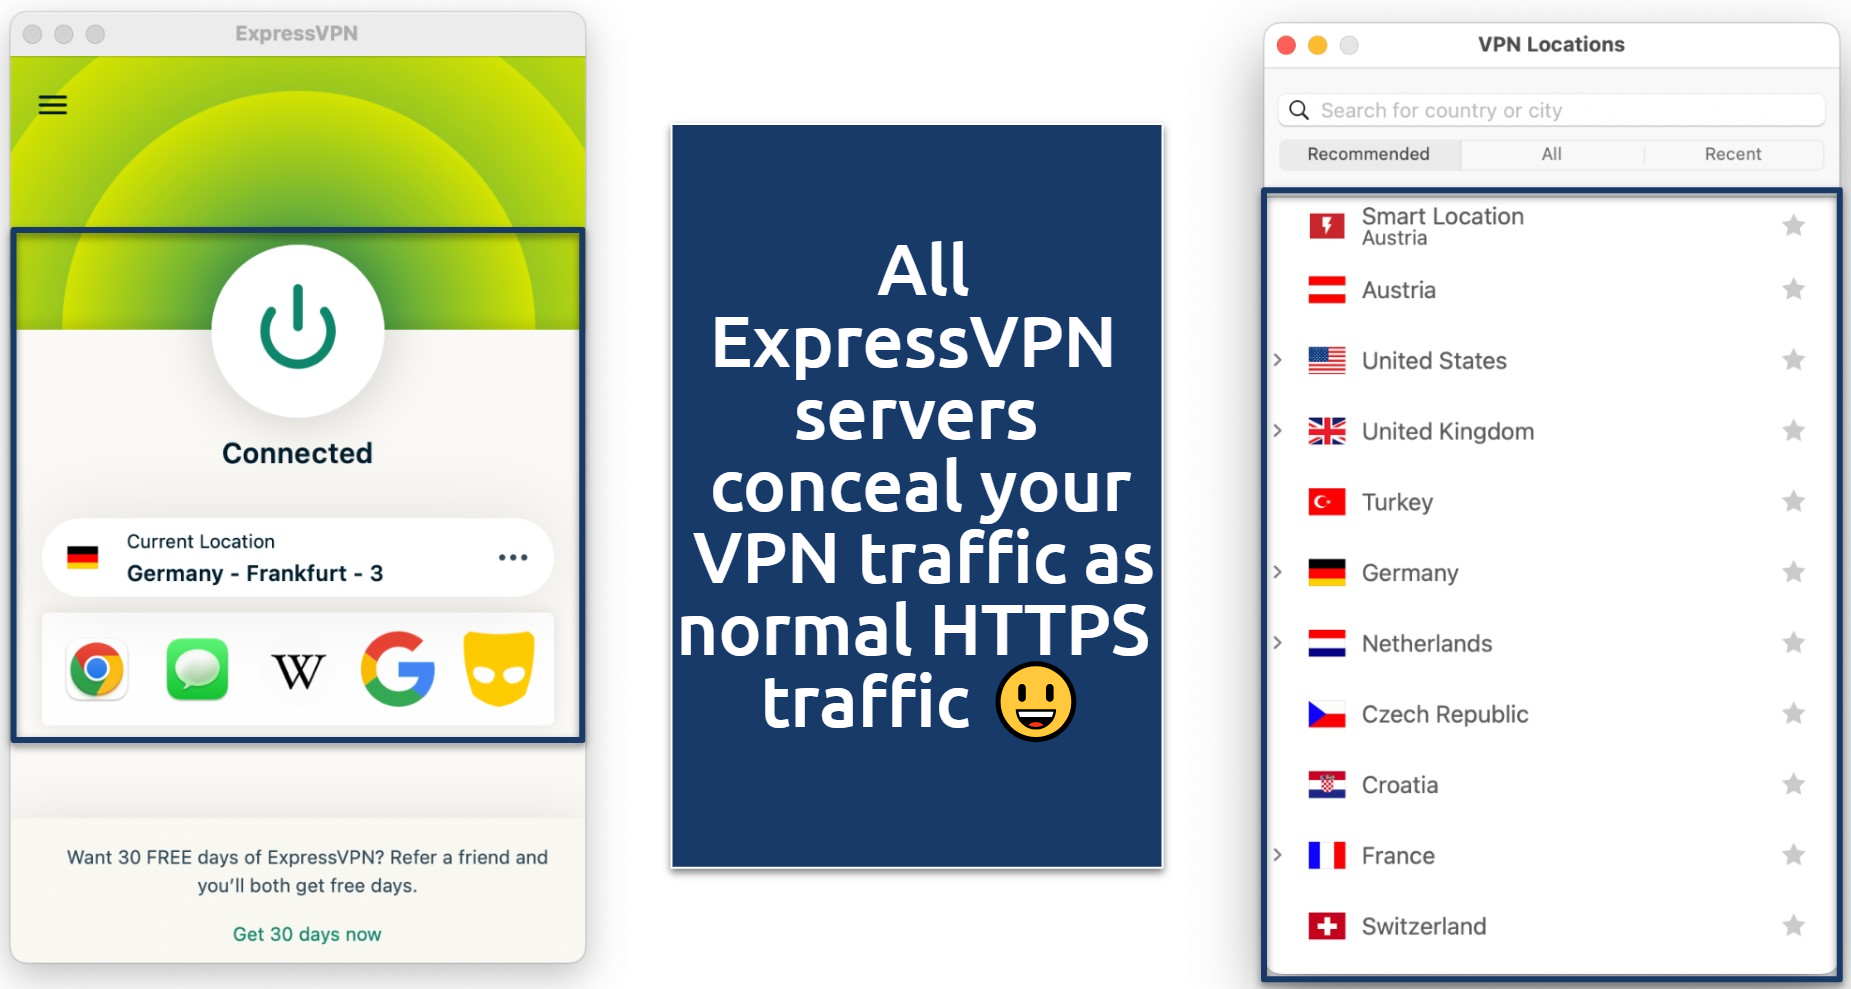 Screenshot of ExpressVPN connected to a Germany - Frankfurt - 3 server